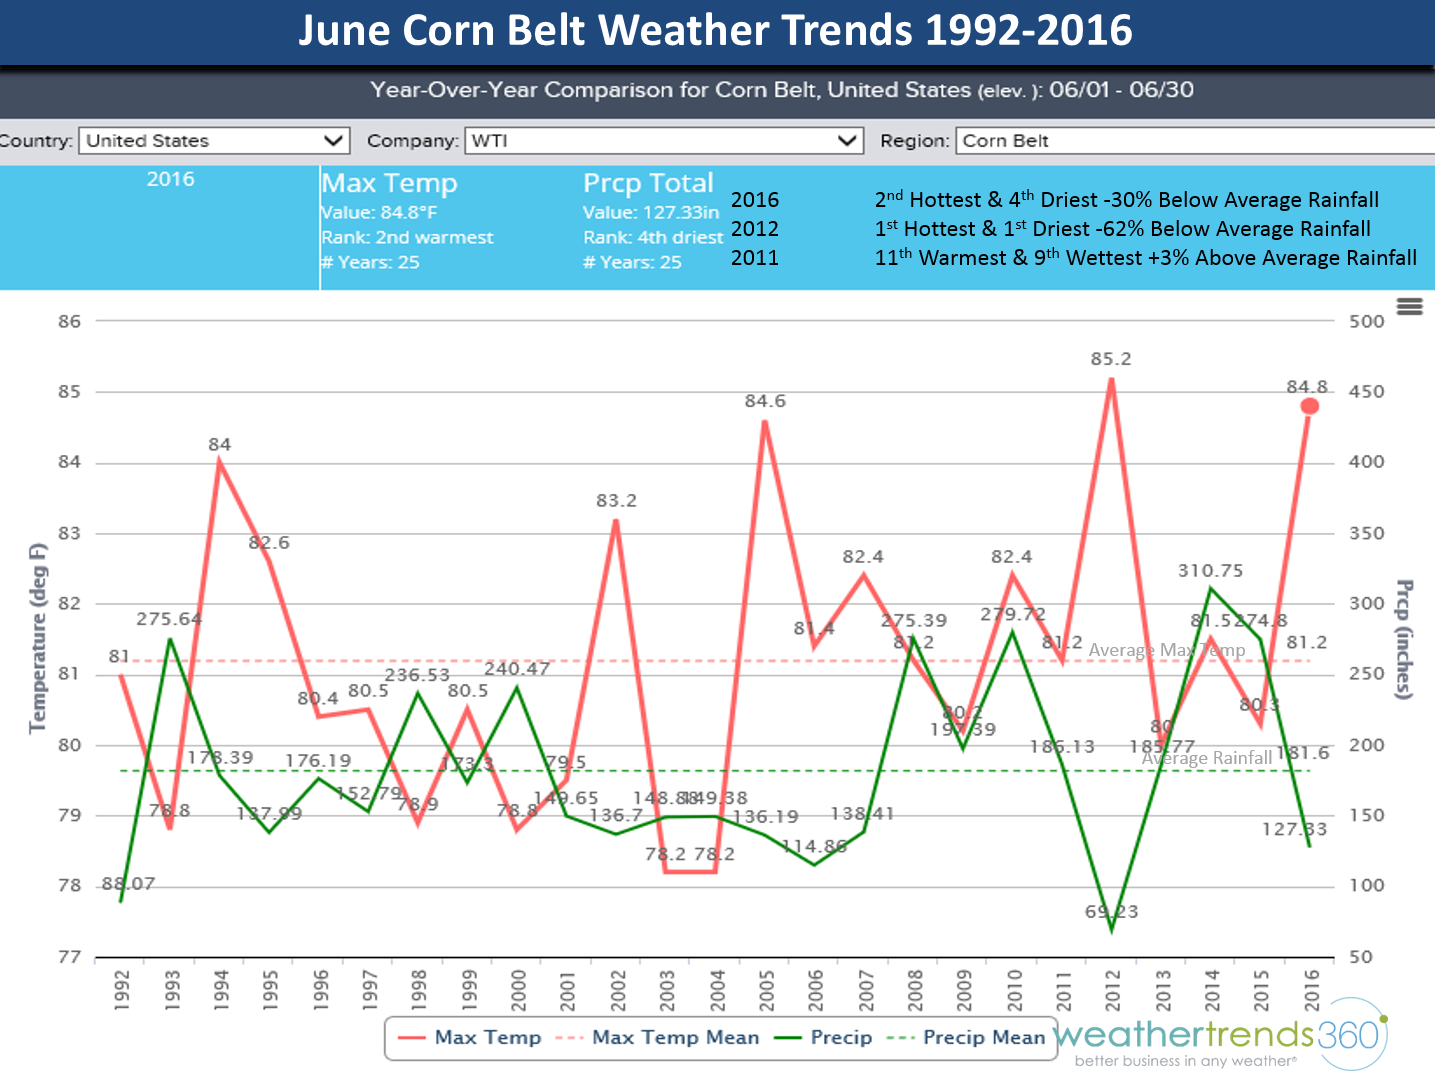 Corn Trendline Yield Chart